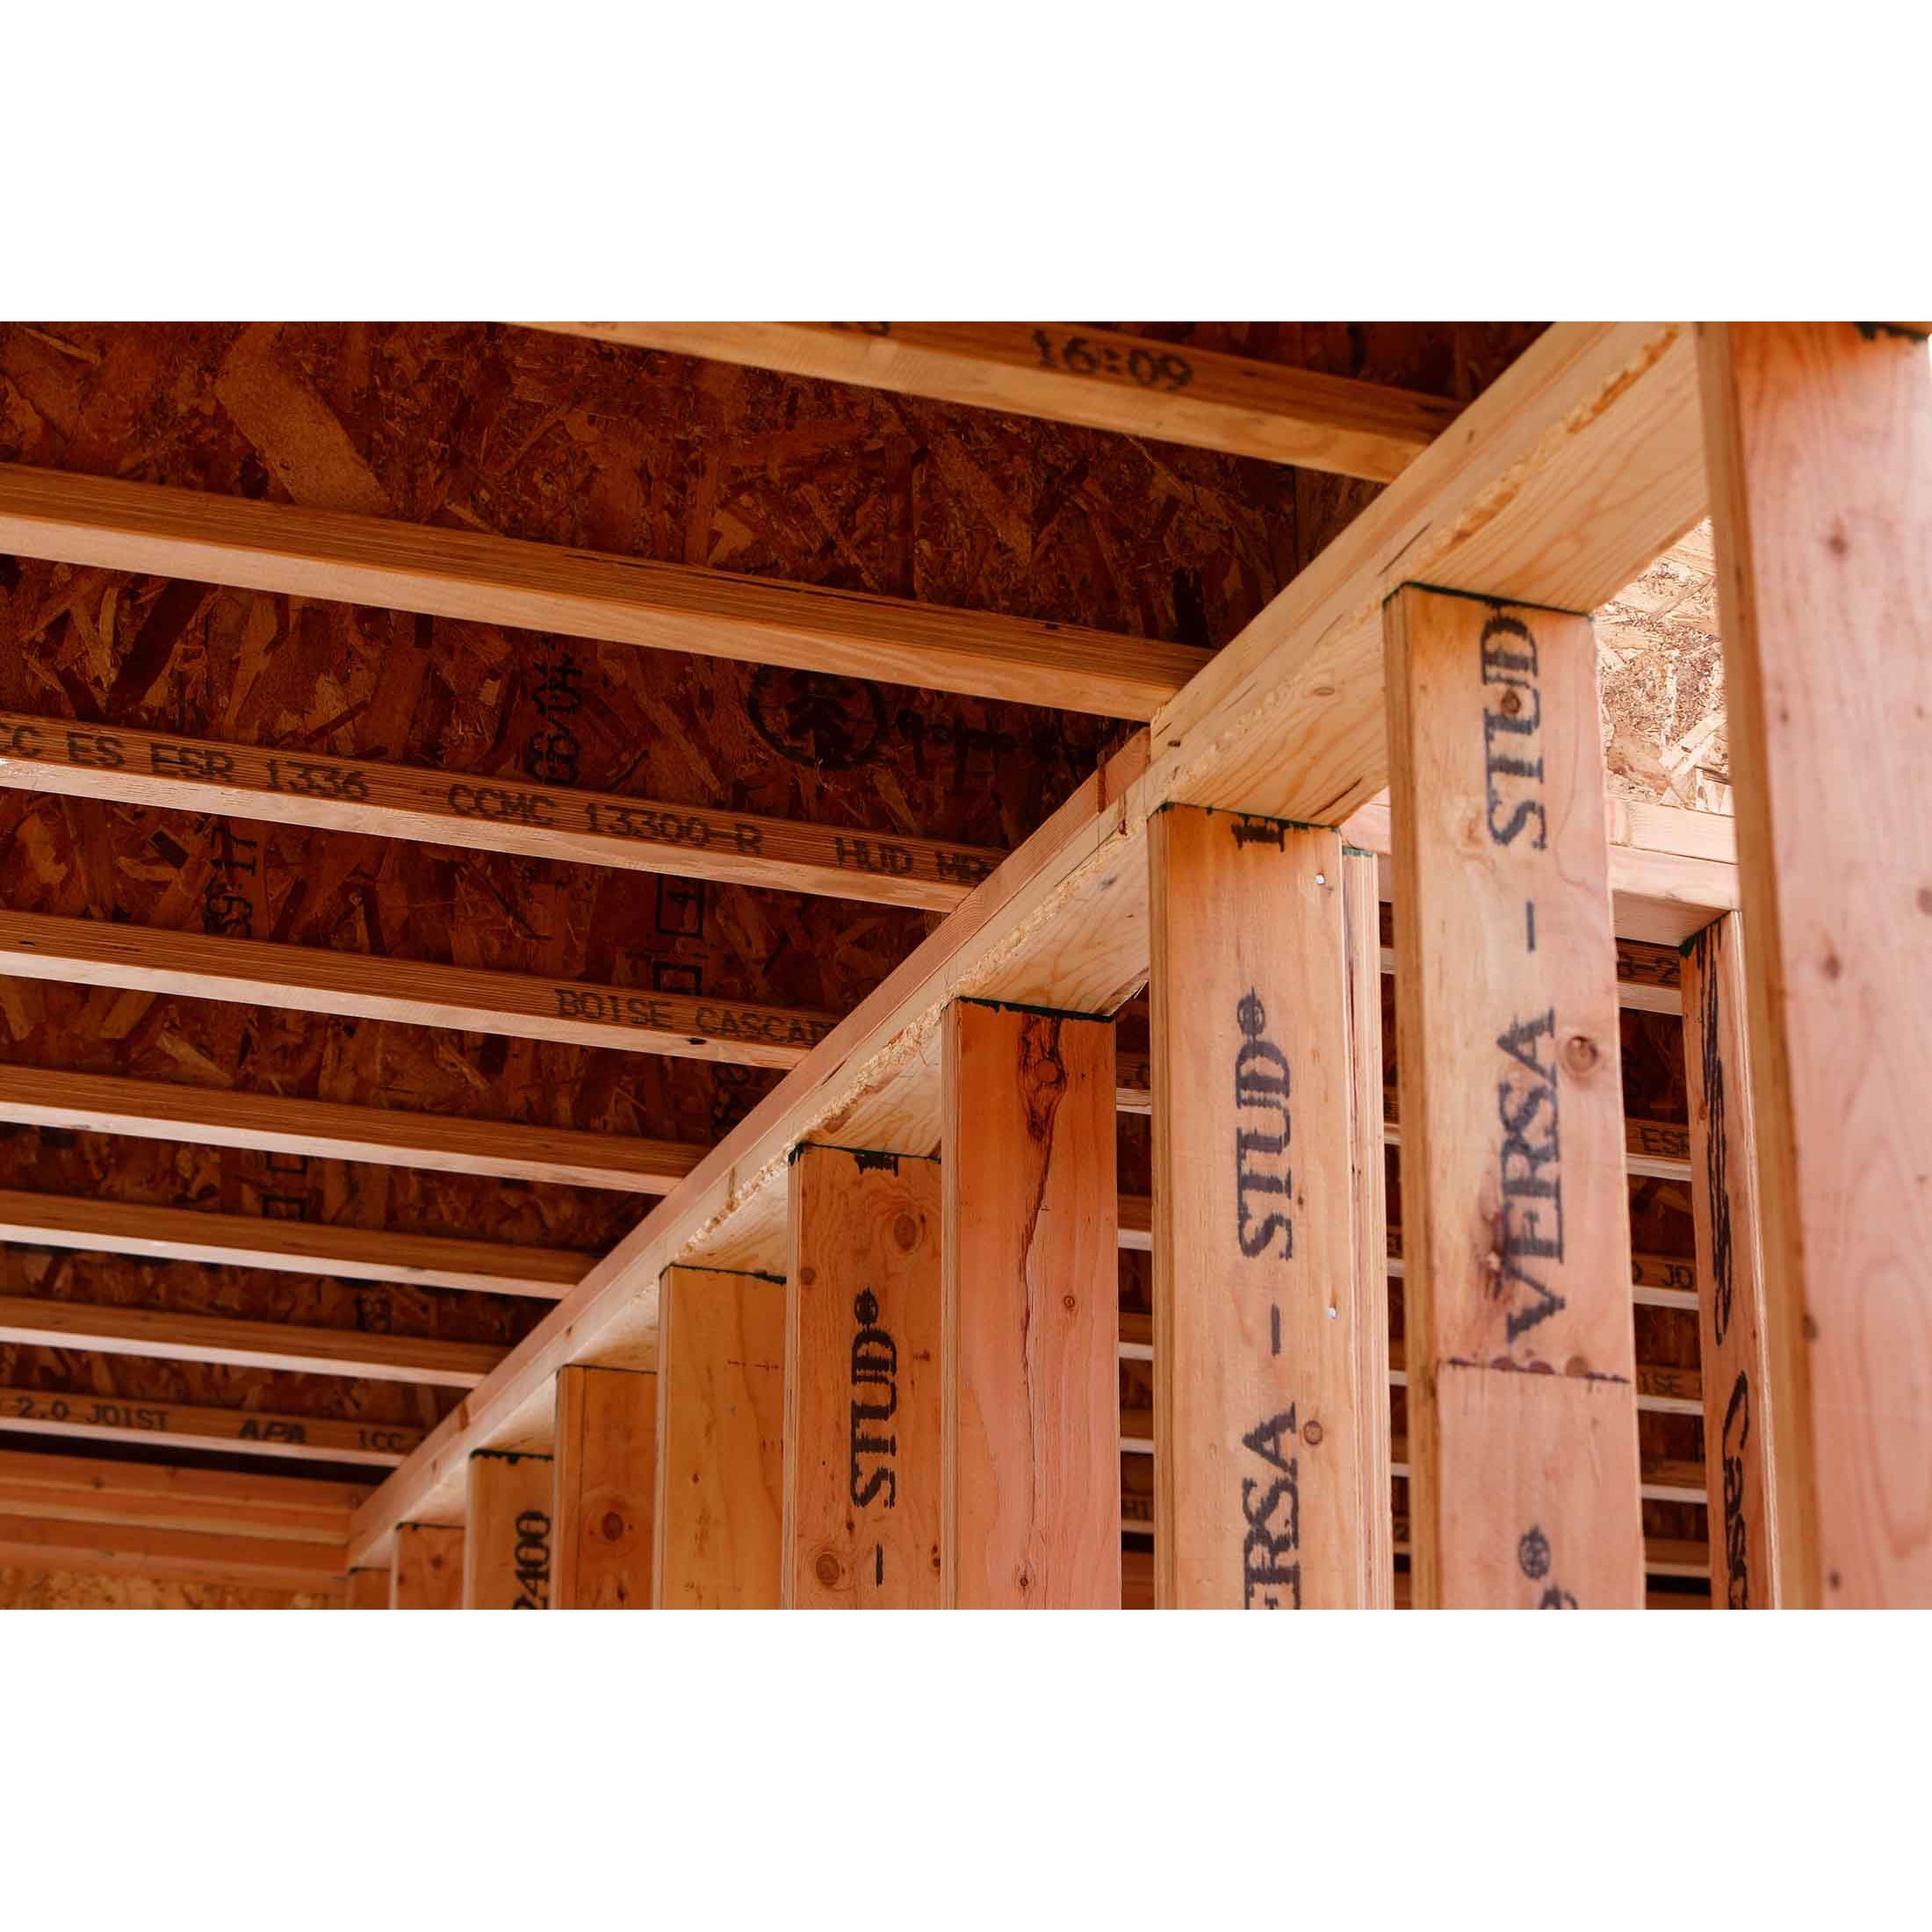 2” X 4” X 10’ TimberStrand Laminated Strand Lumber Pre-cut studs